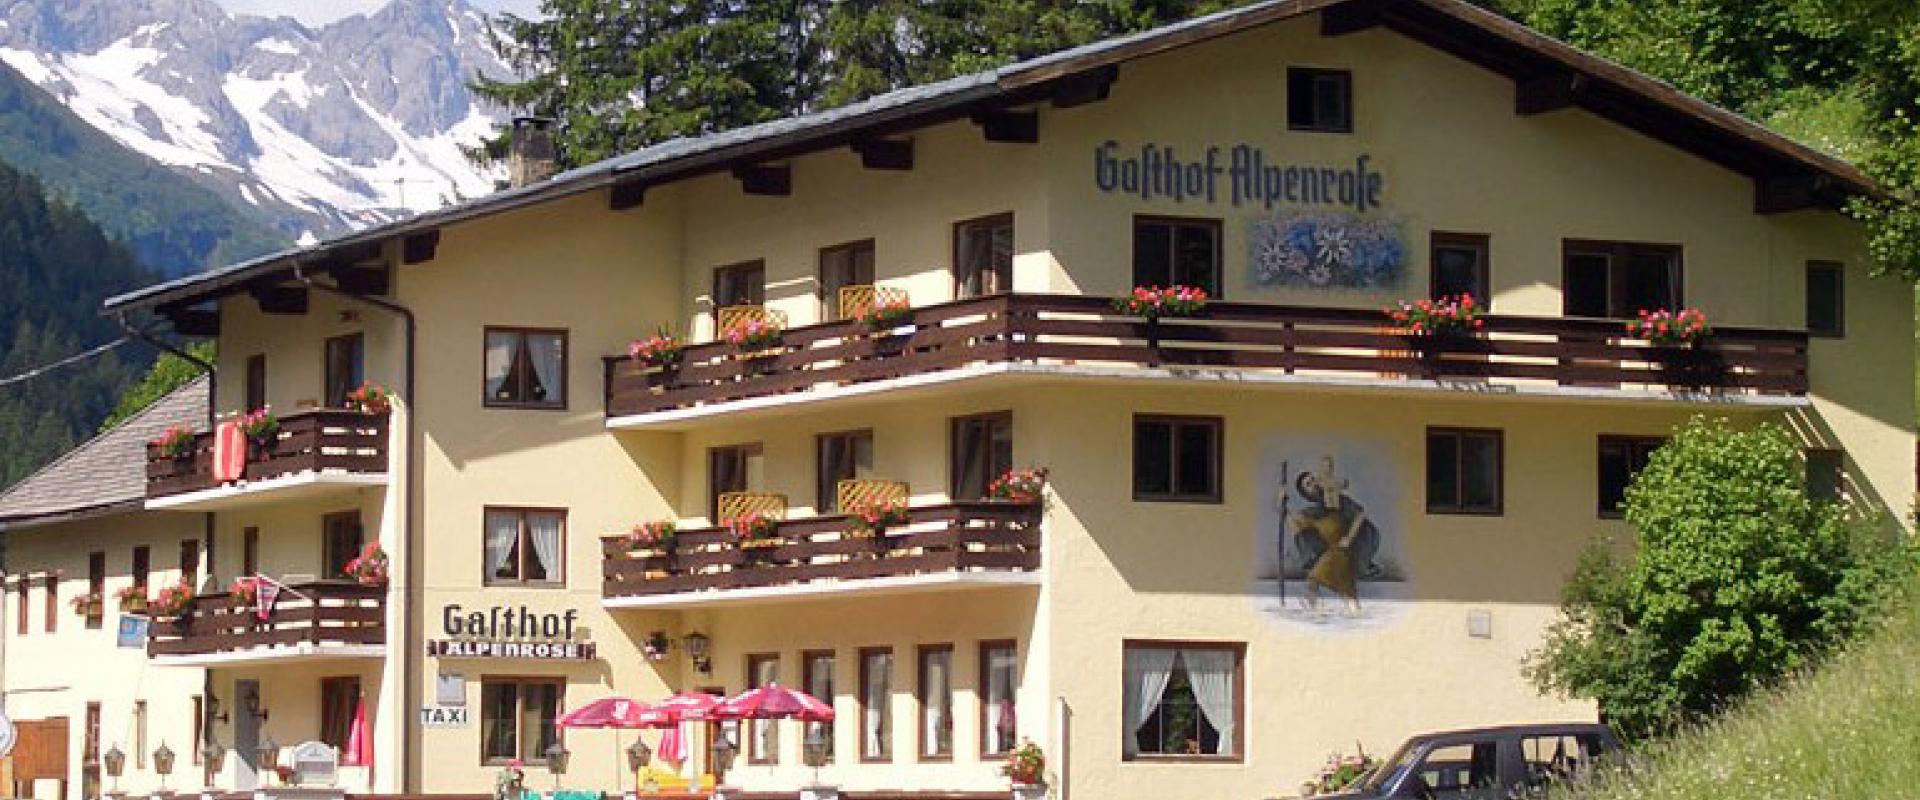 15475 Motorrad Hotel Alpenrose in Tirol.jpg